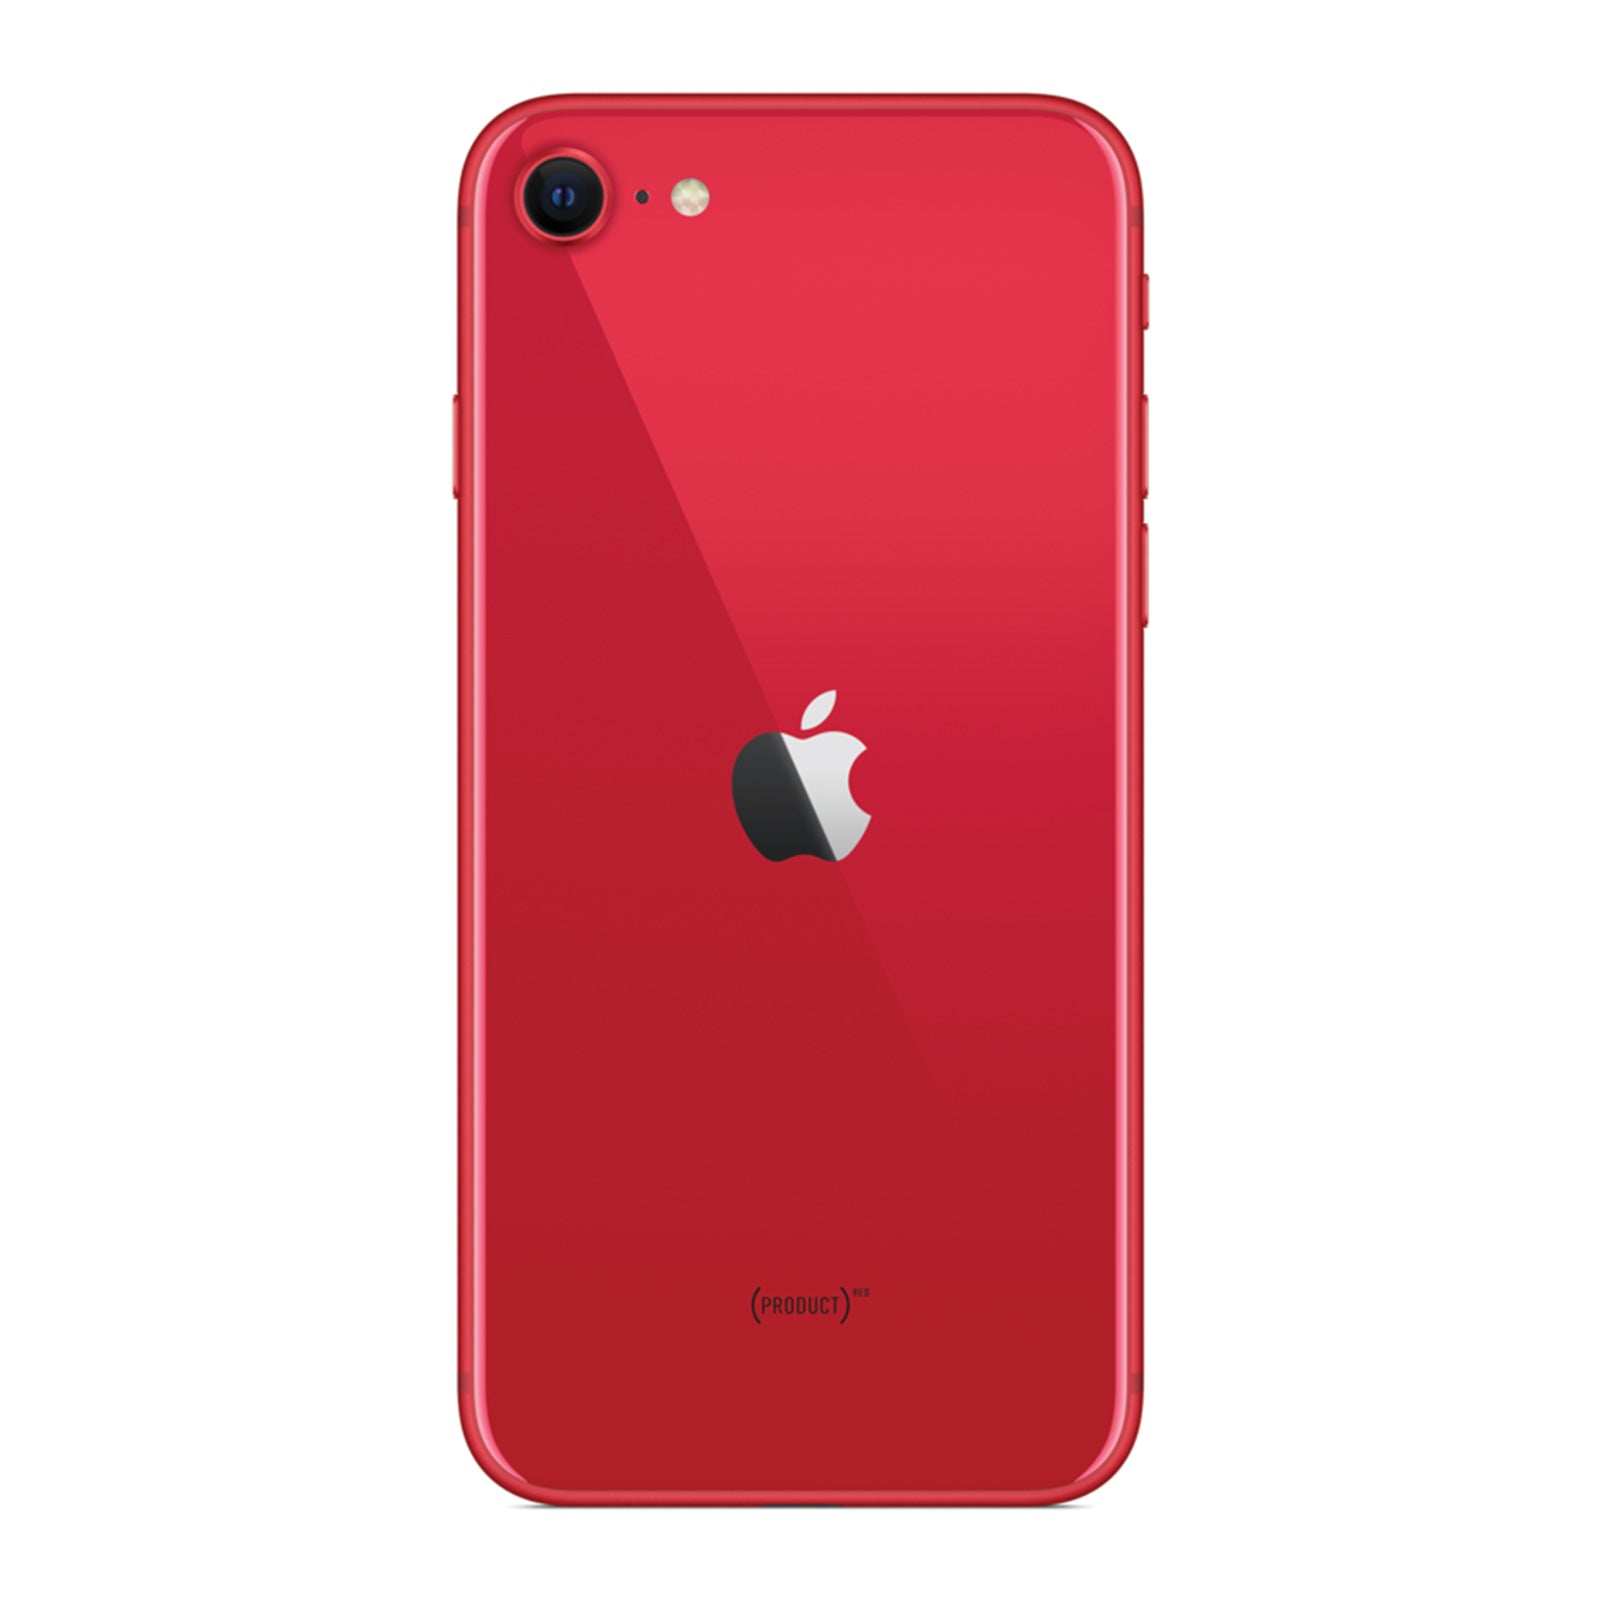 Apple iPhone SE 2nd Gen 256GB Product Red Good Verizon